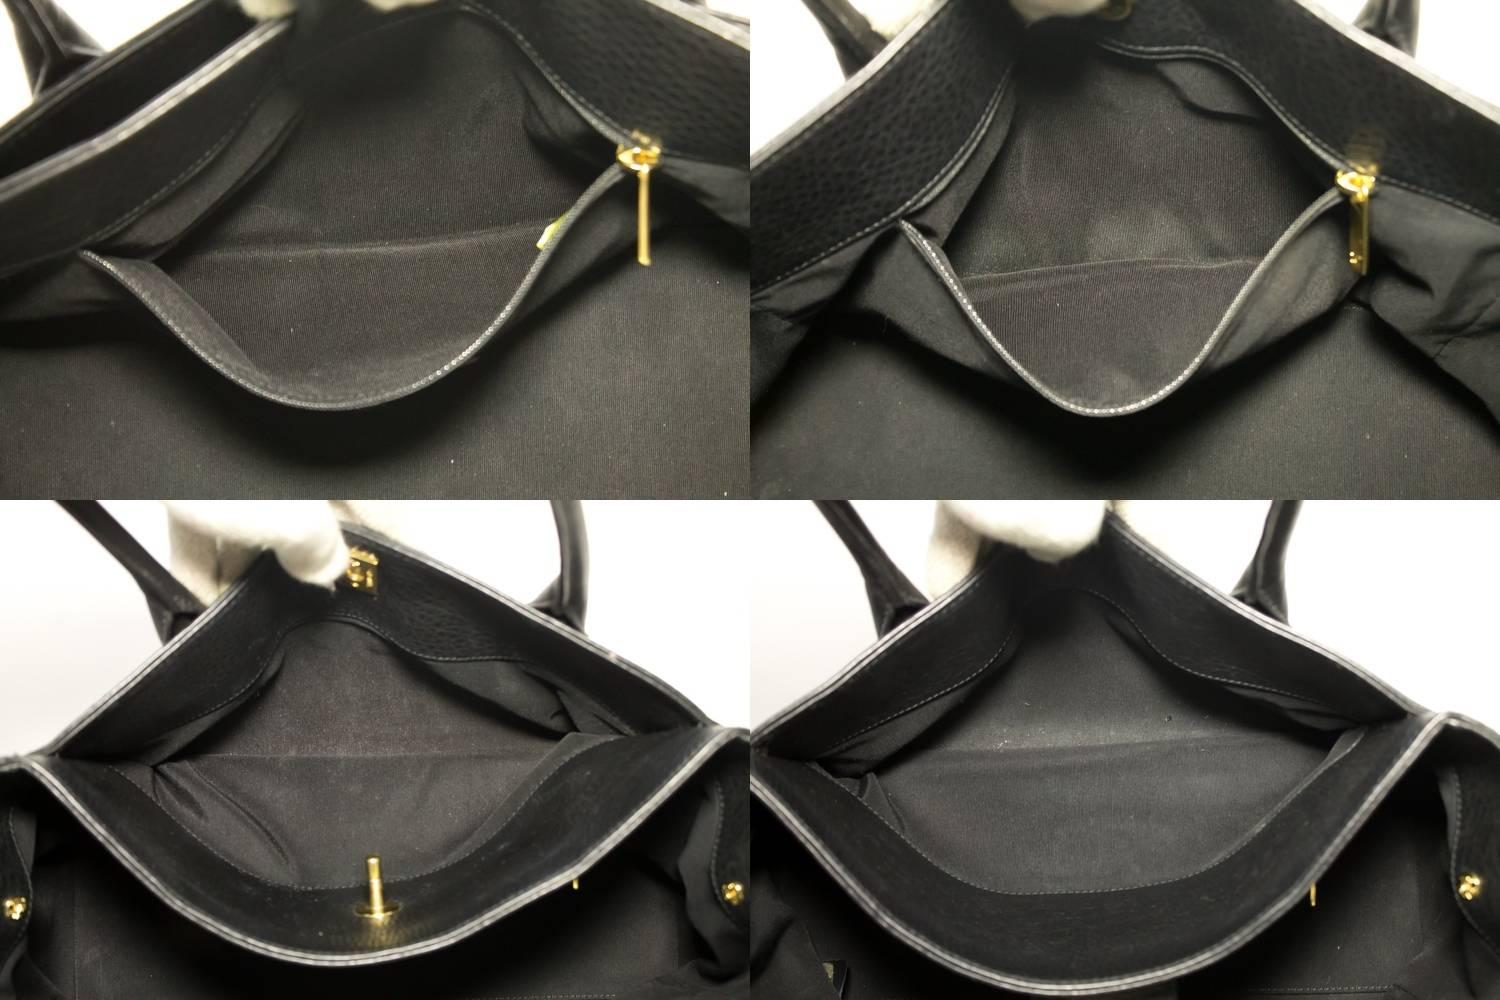 CHANEL Executive Tote 2014 Caviar Shoulder Bag Black Gold Leather 1